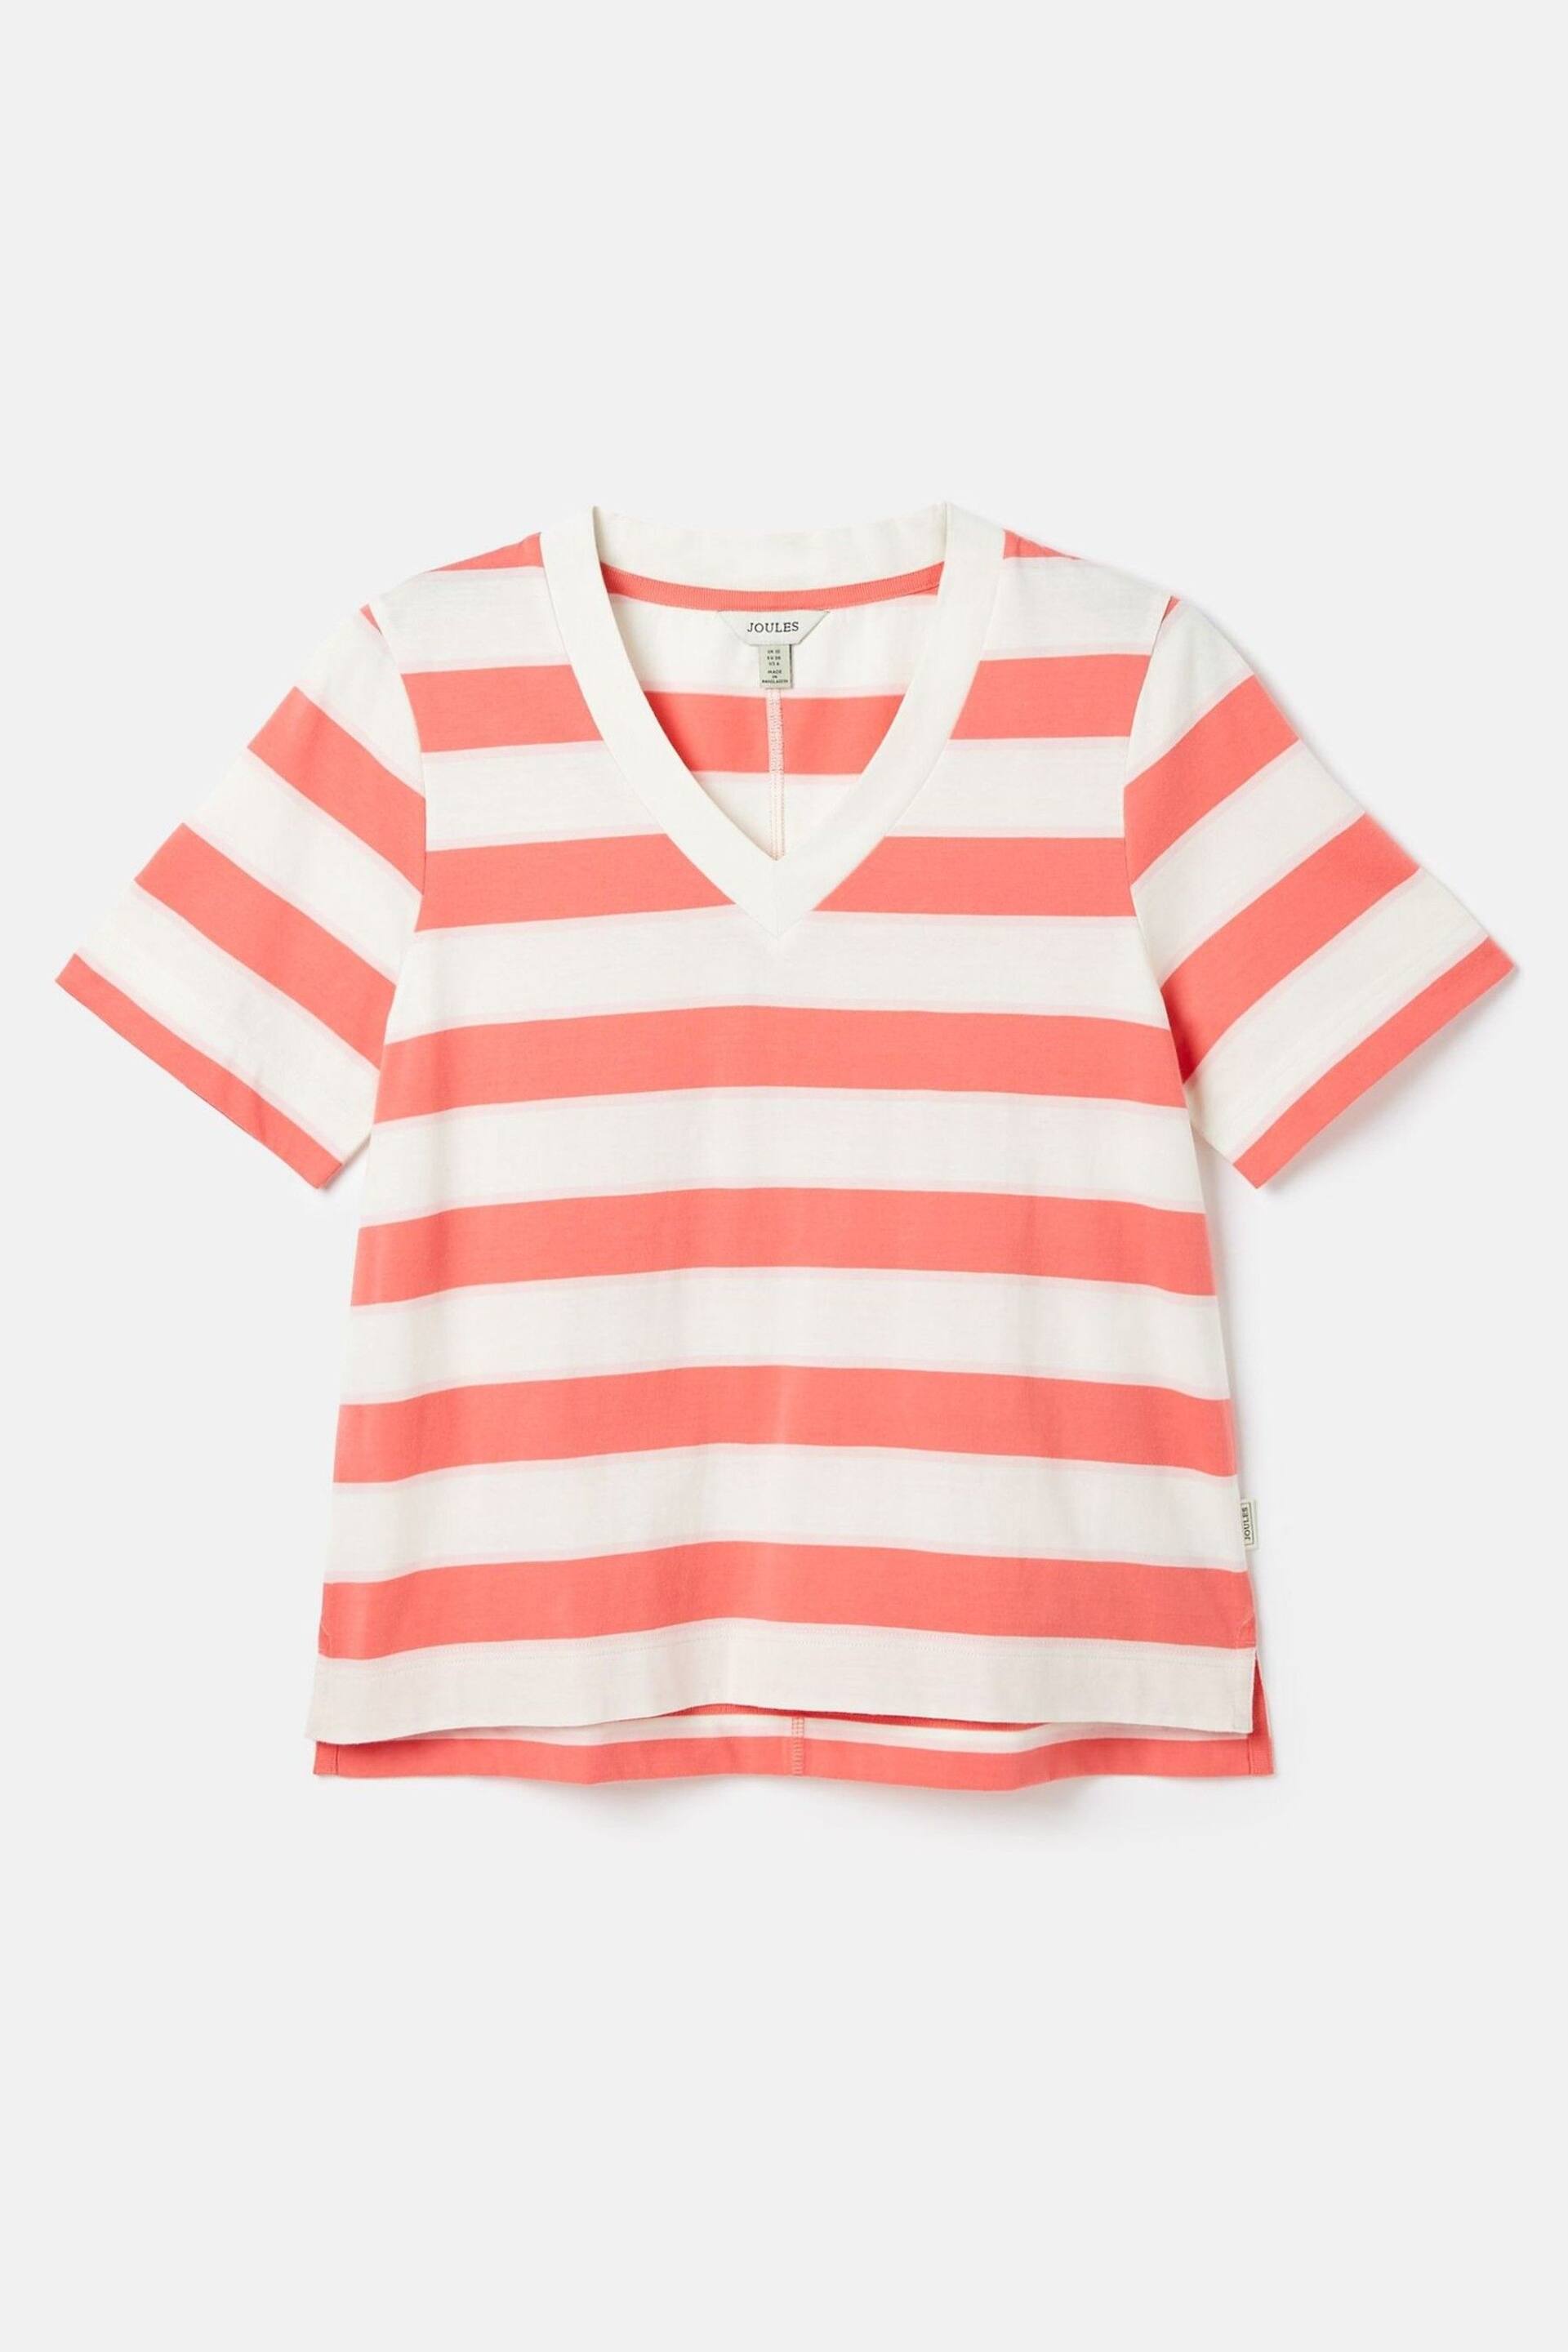 Joules Darcey Pink stripe V-Neck T-Shirt - Image 6 of 6